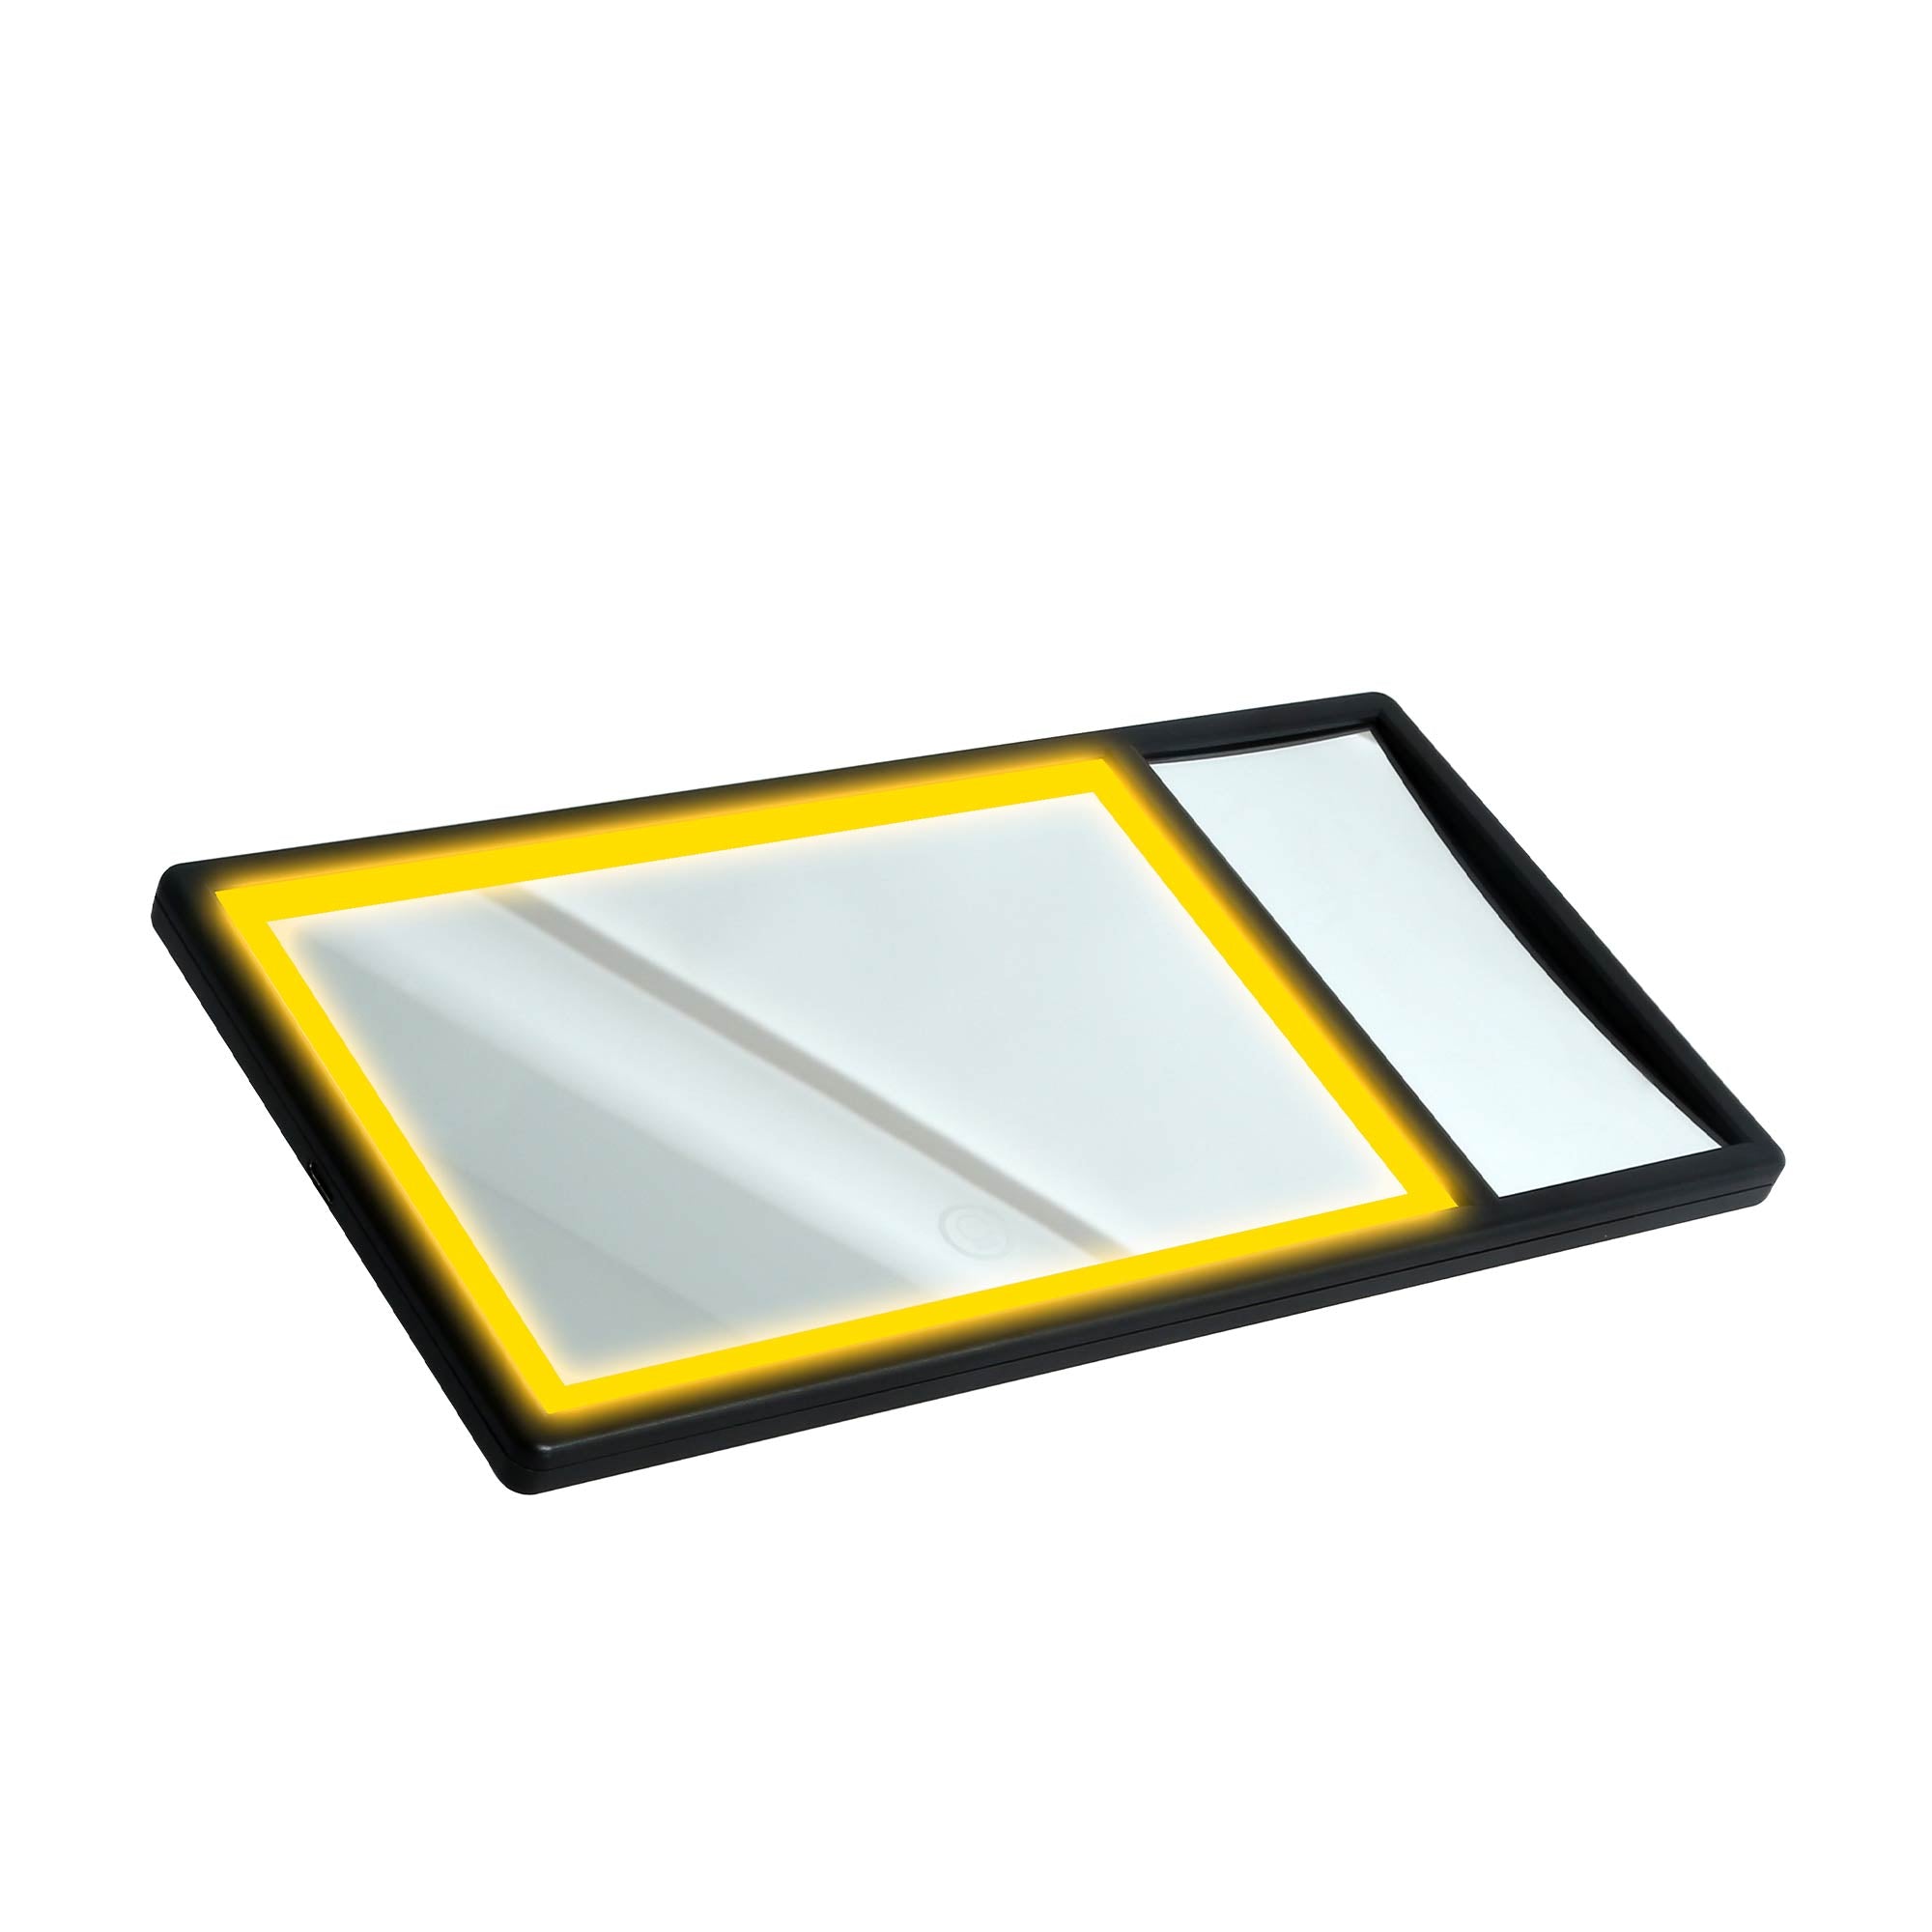 Vanitify Car LED Make Up Mirror | Three Light Modes | Portable